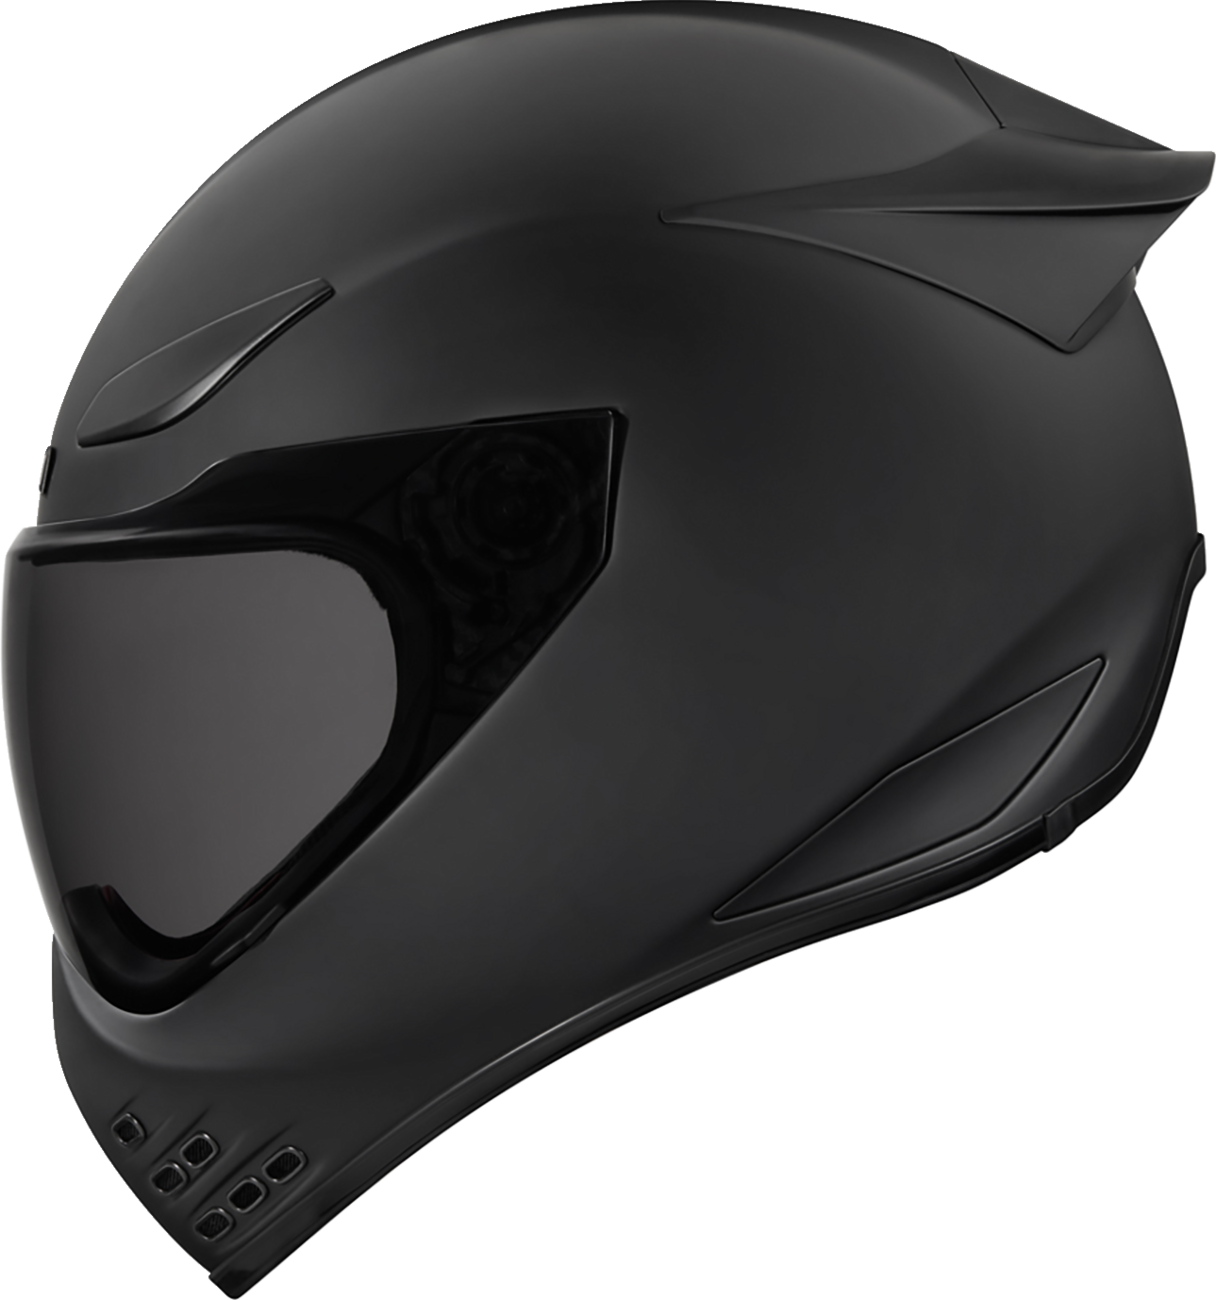 ICON Domain™ Helmet - Cornelius - Rubatone - Medium 0101-15458